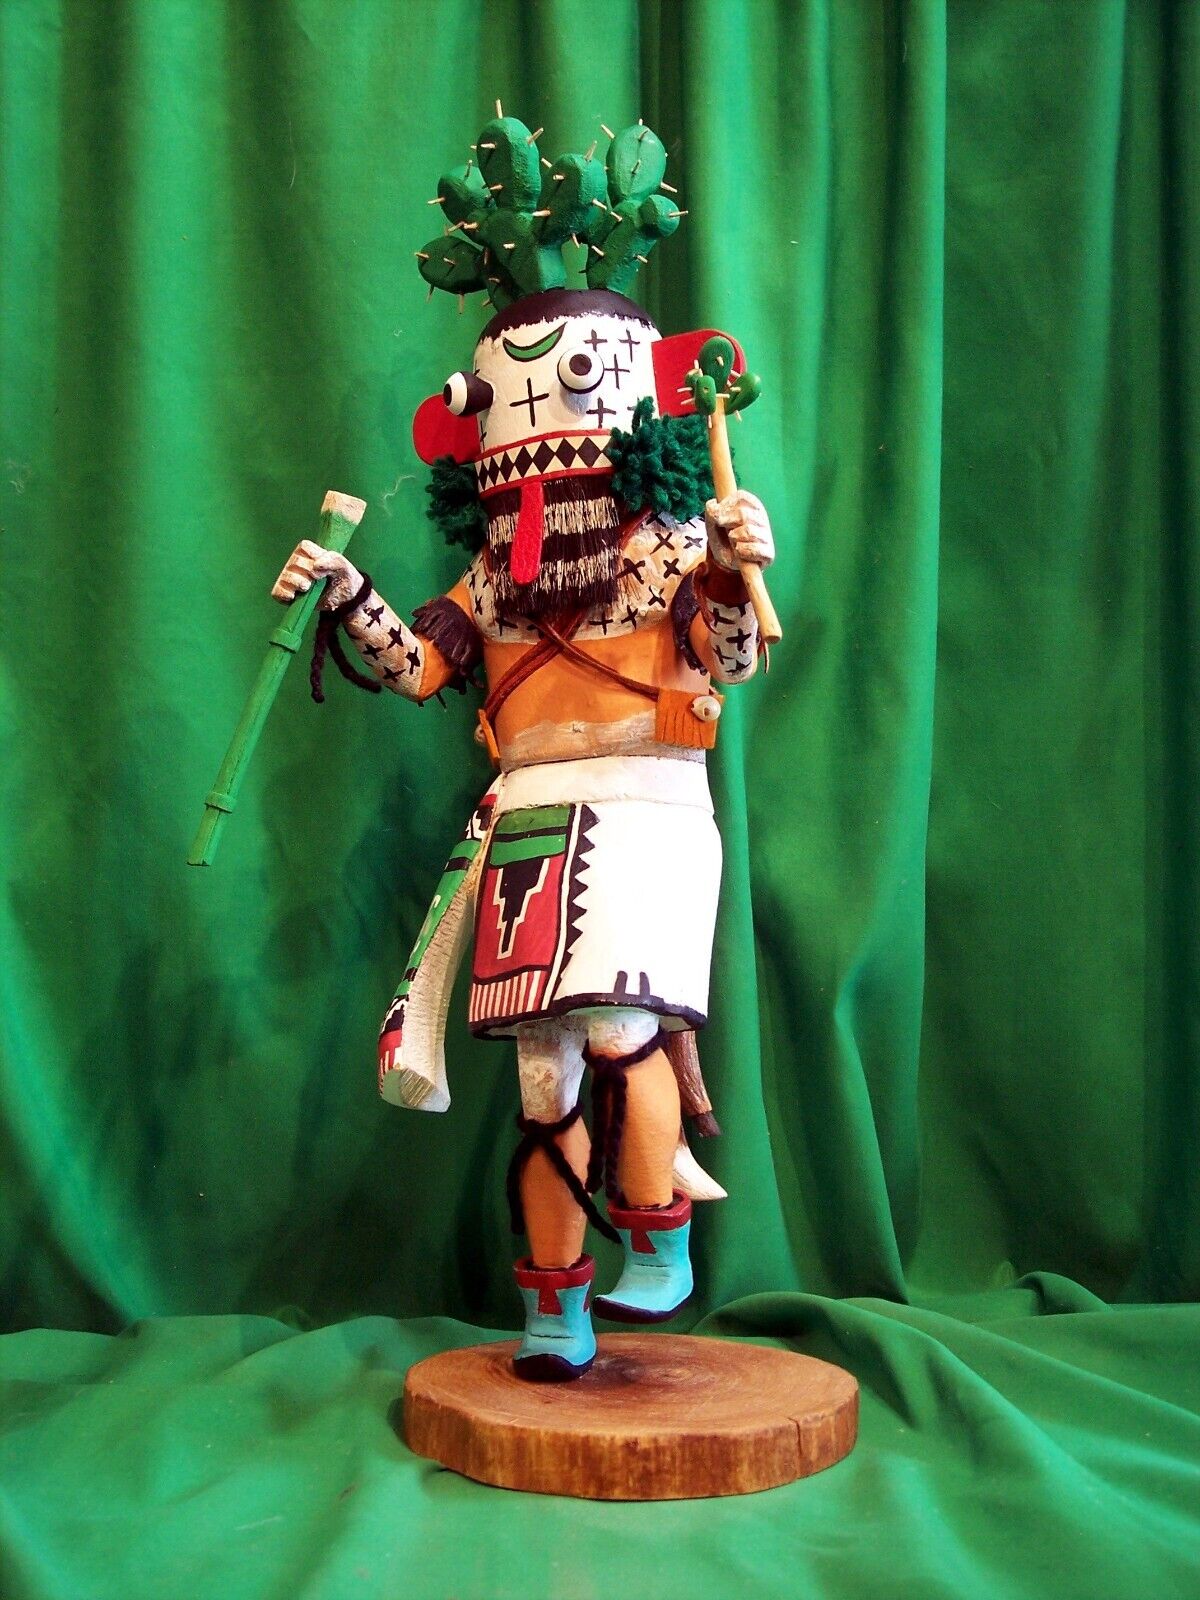 Hopi Kachina Doll - The Prickly Pear Gathering Kachina by Elmer Adams - Huge